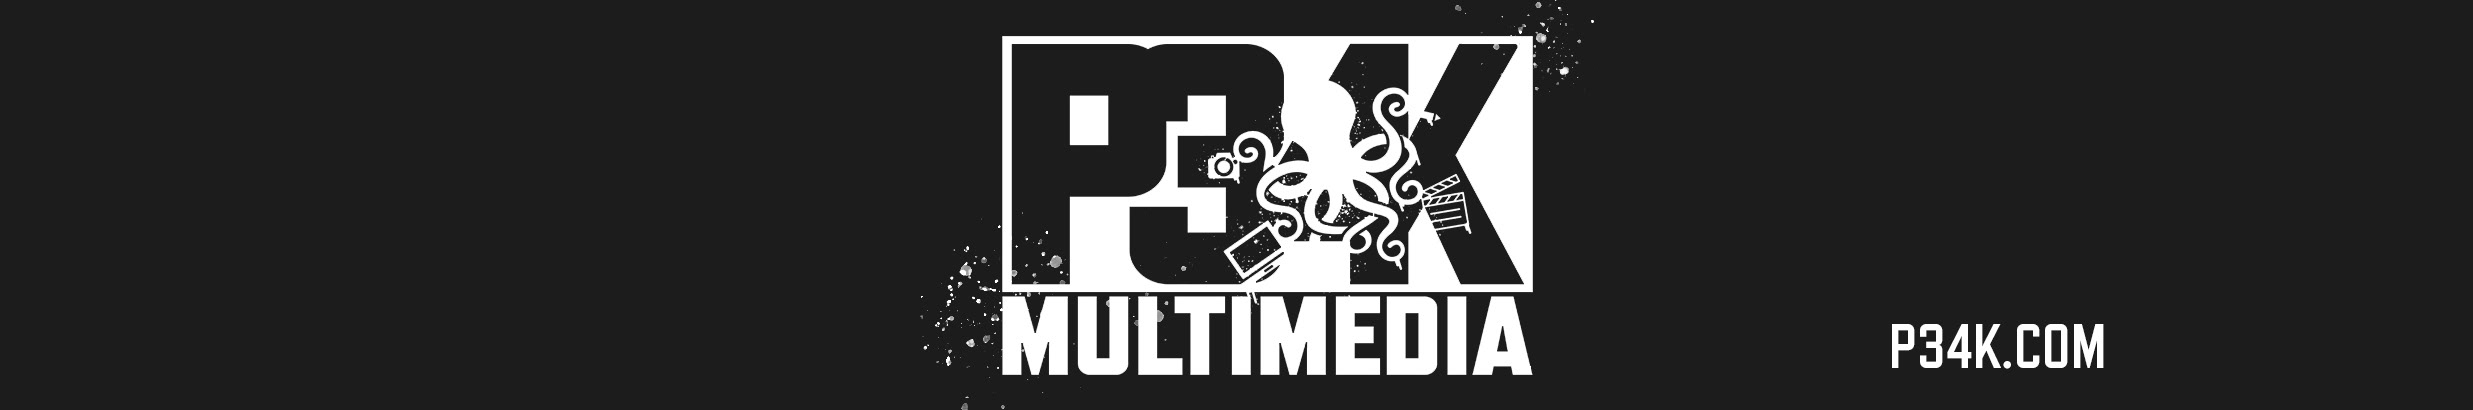 P34K Multimedia's profile banner